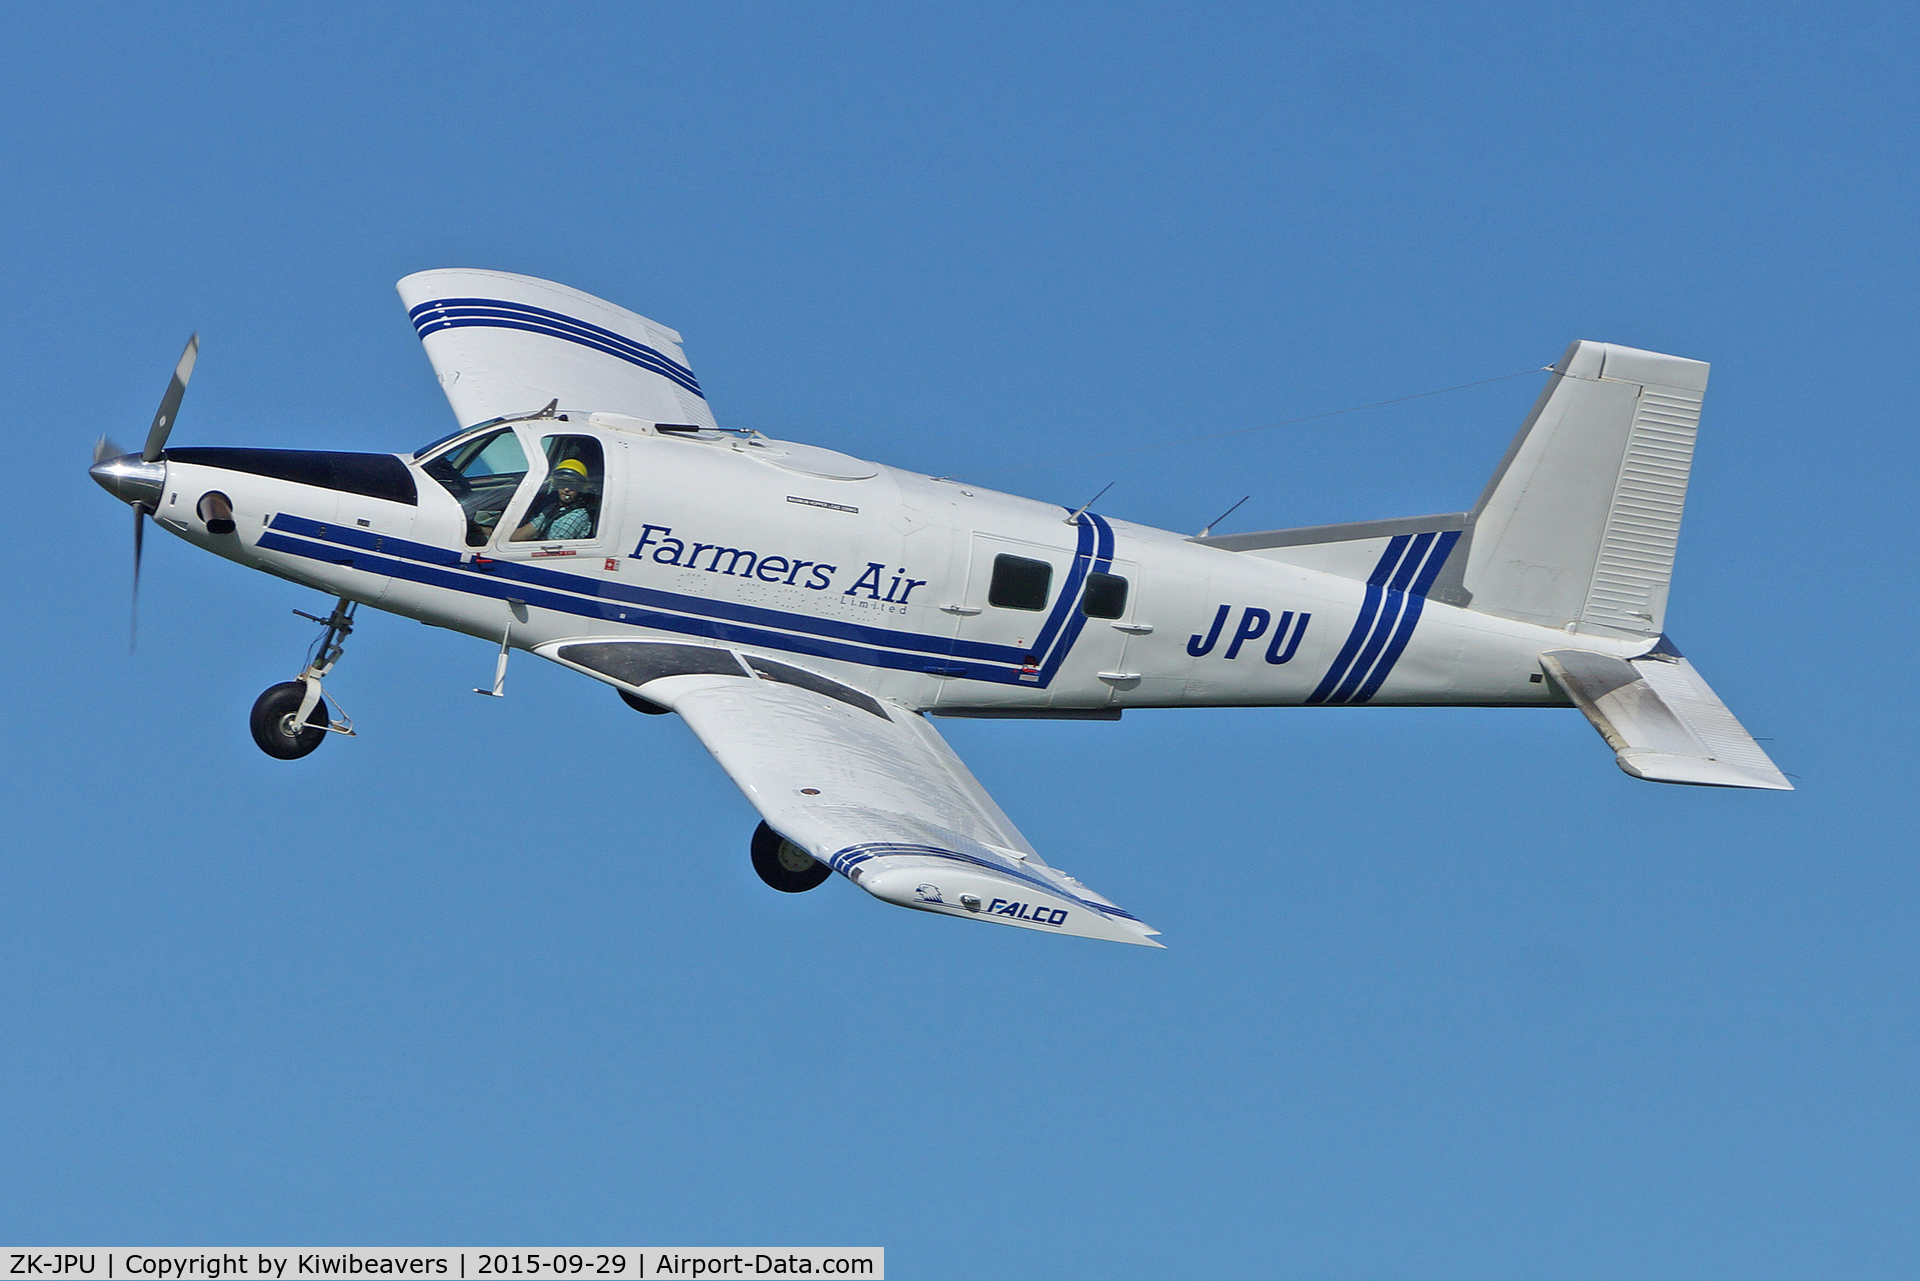 ZK-JPU, 2003 Pacific Aerospace 750XL C/N 117, George Anderson piloting JPU on Topdressing operations at Nuhaka, South of Gisborne, N.Z.